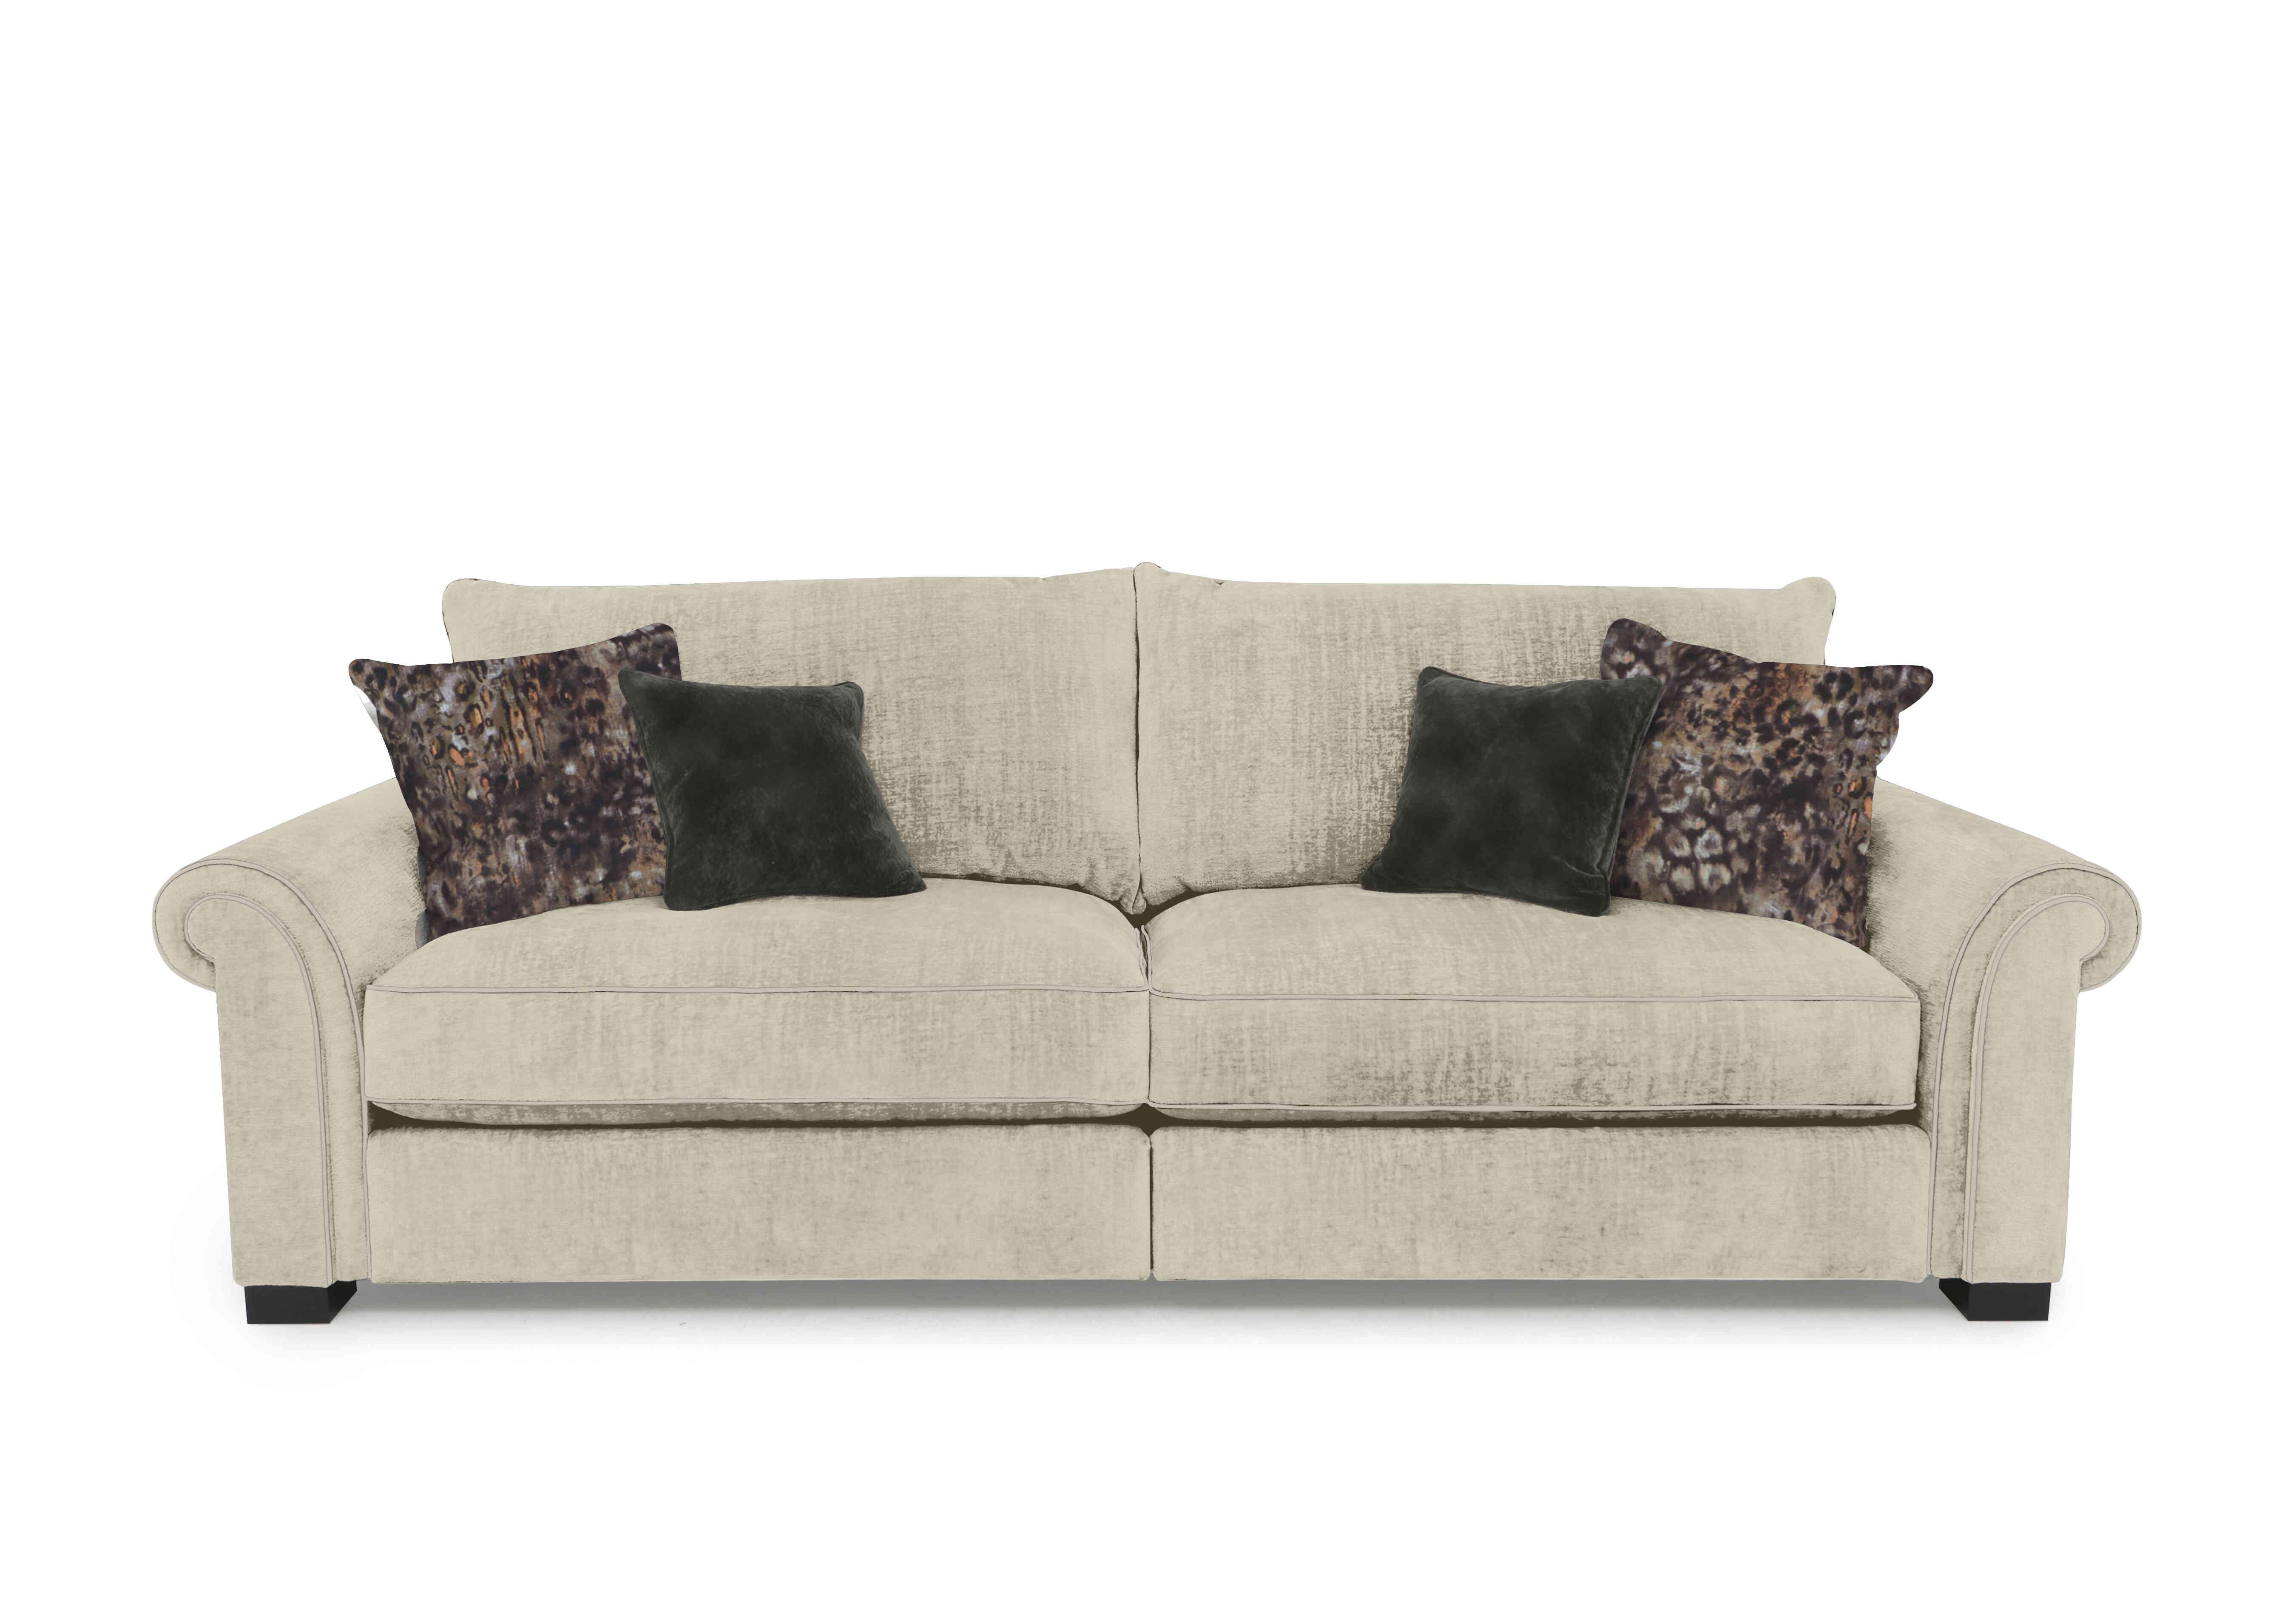 Modern Classics St James Park 4 Seater Split Frame Sofa in Remini Pebble Sp Mf on Furniture Village